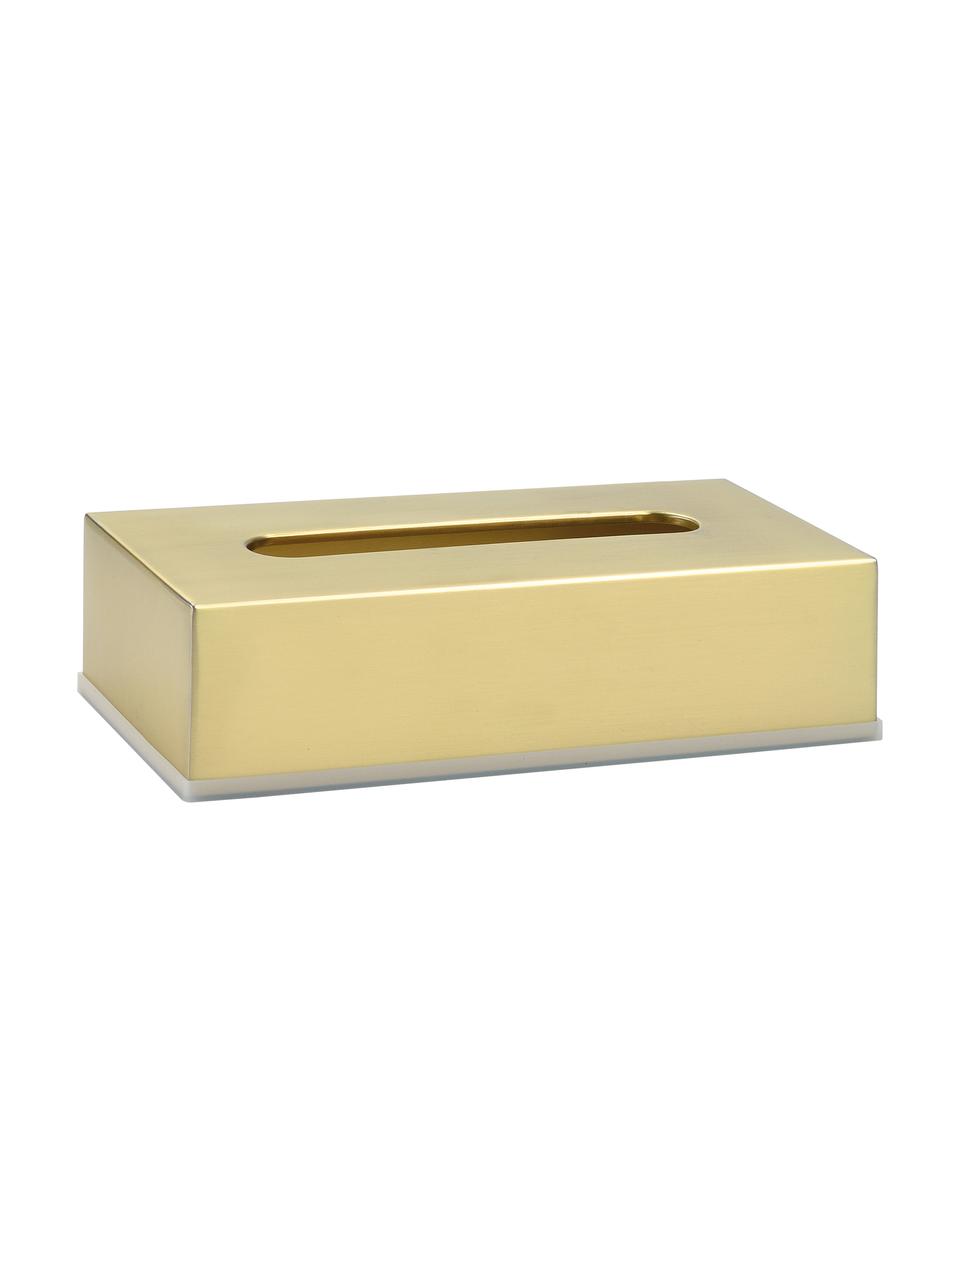 Kosmetiktuchbox Acton, Edelstahl, beschichtet, Messingfarben, B 26 x H 7 cm